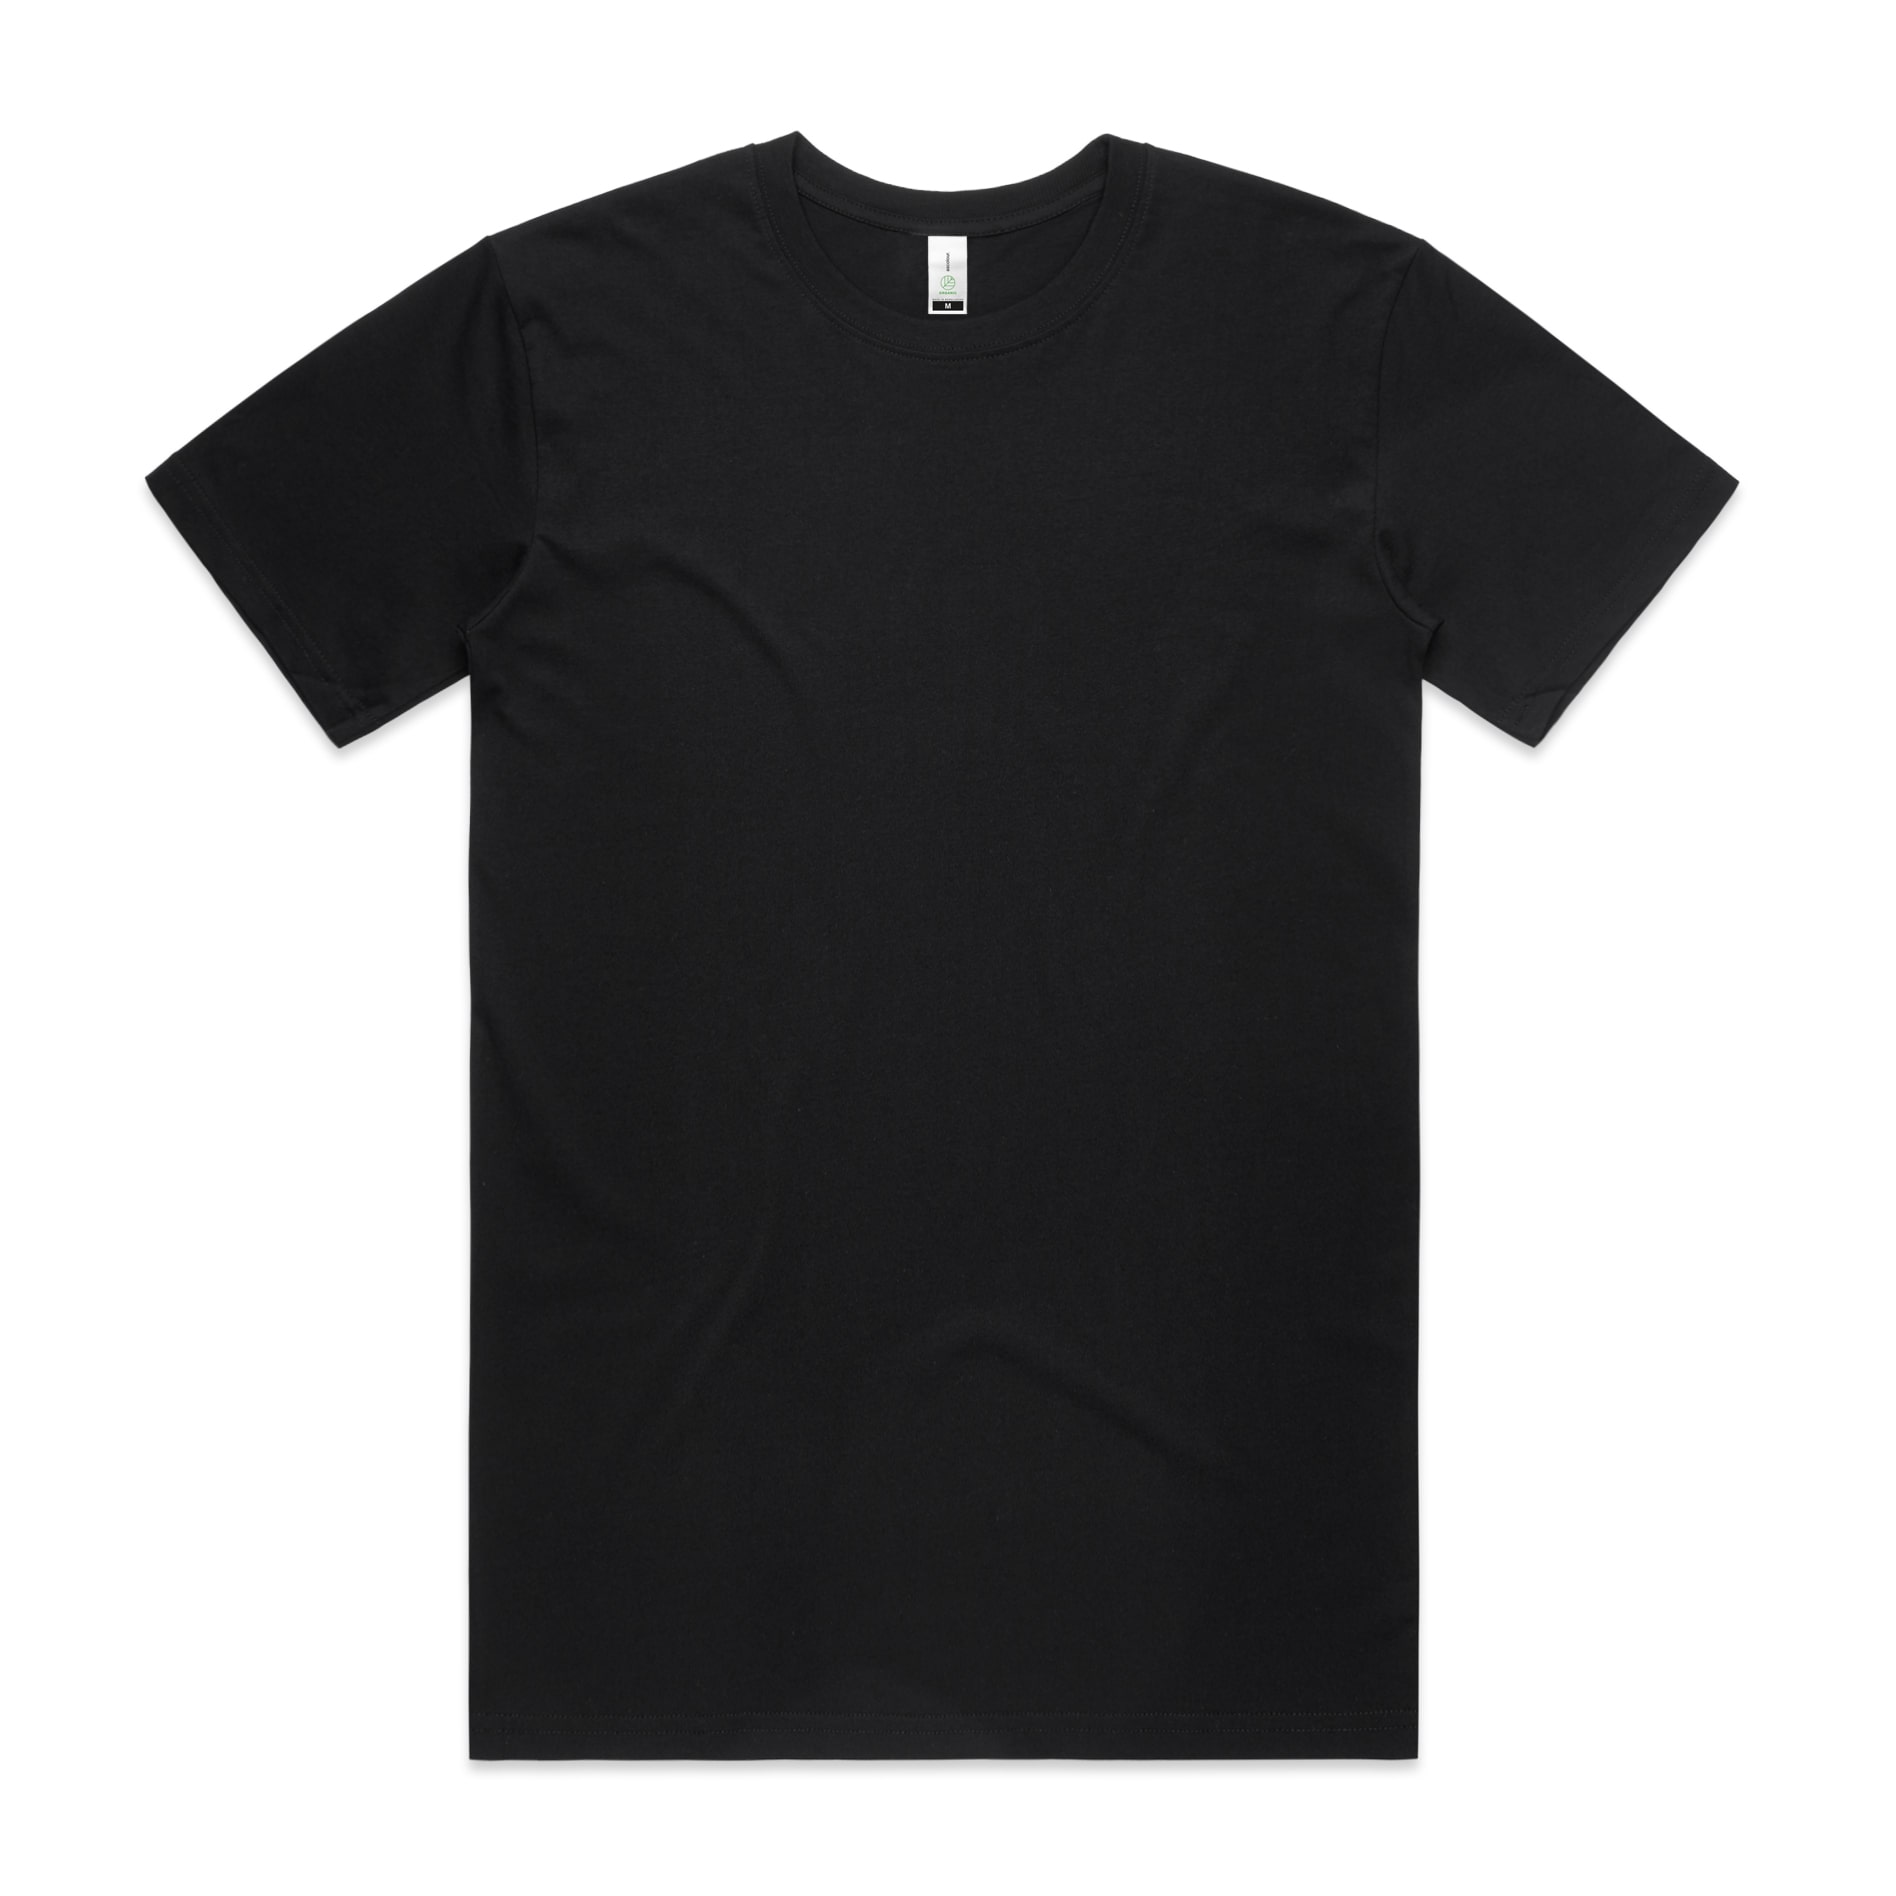 Personalised golf shirts - 5001g staple organic tee black